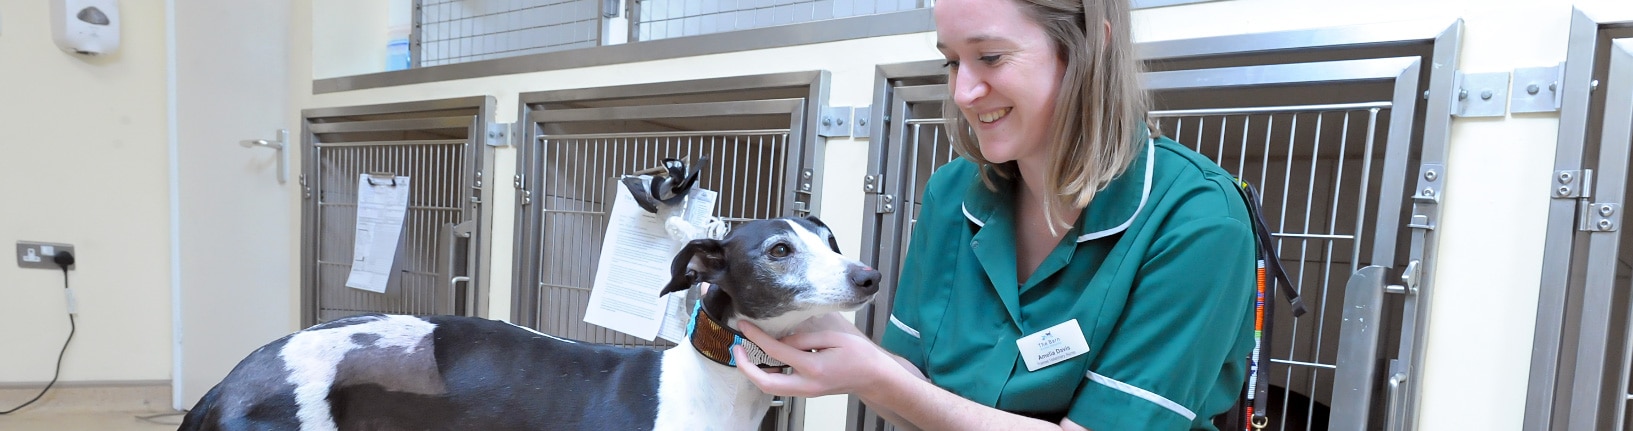 Careers at The Barn Animal Hospital